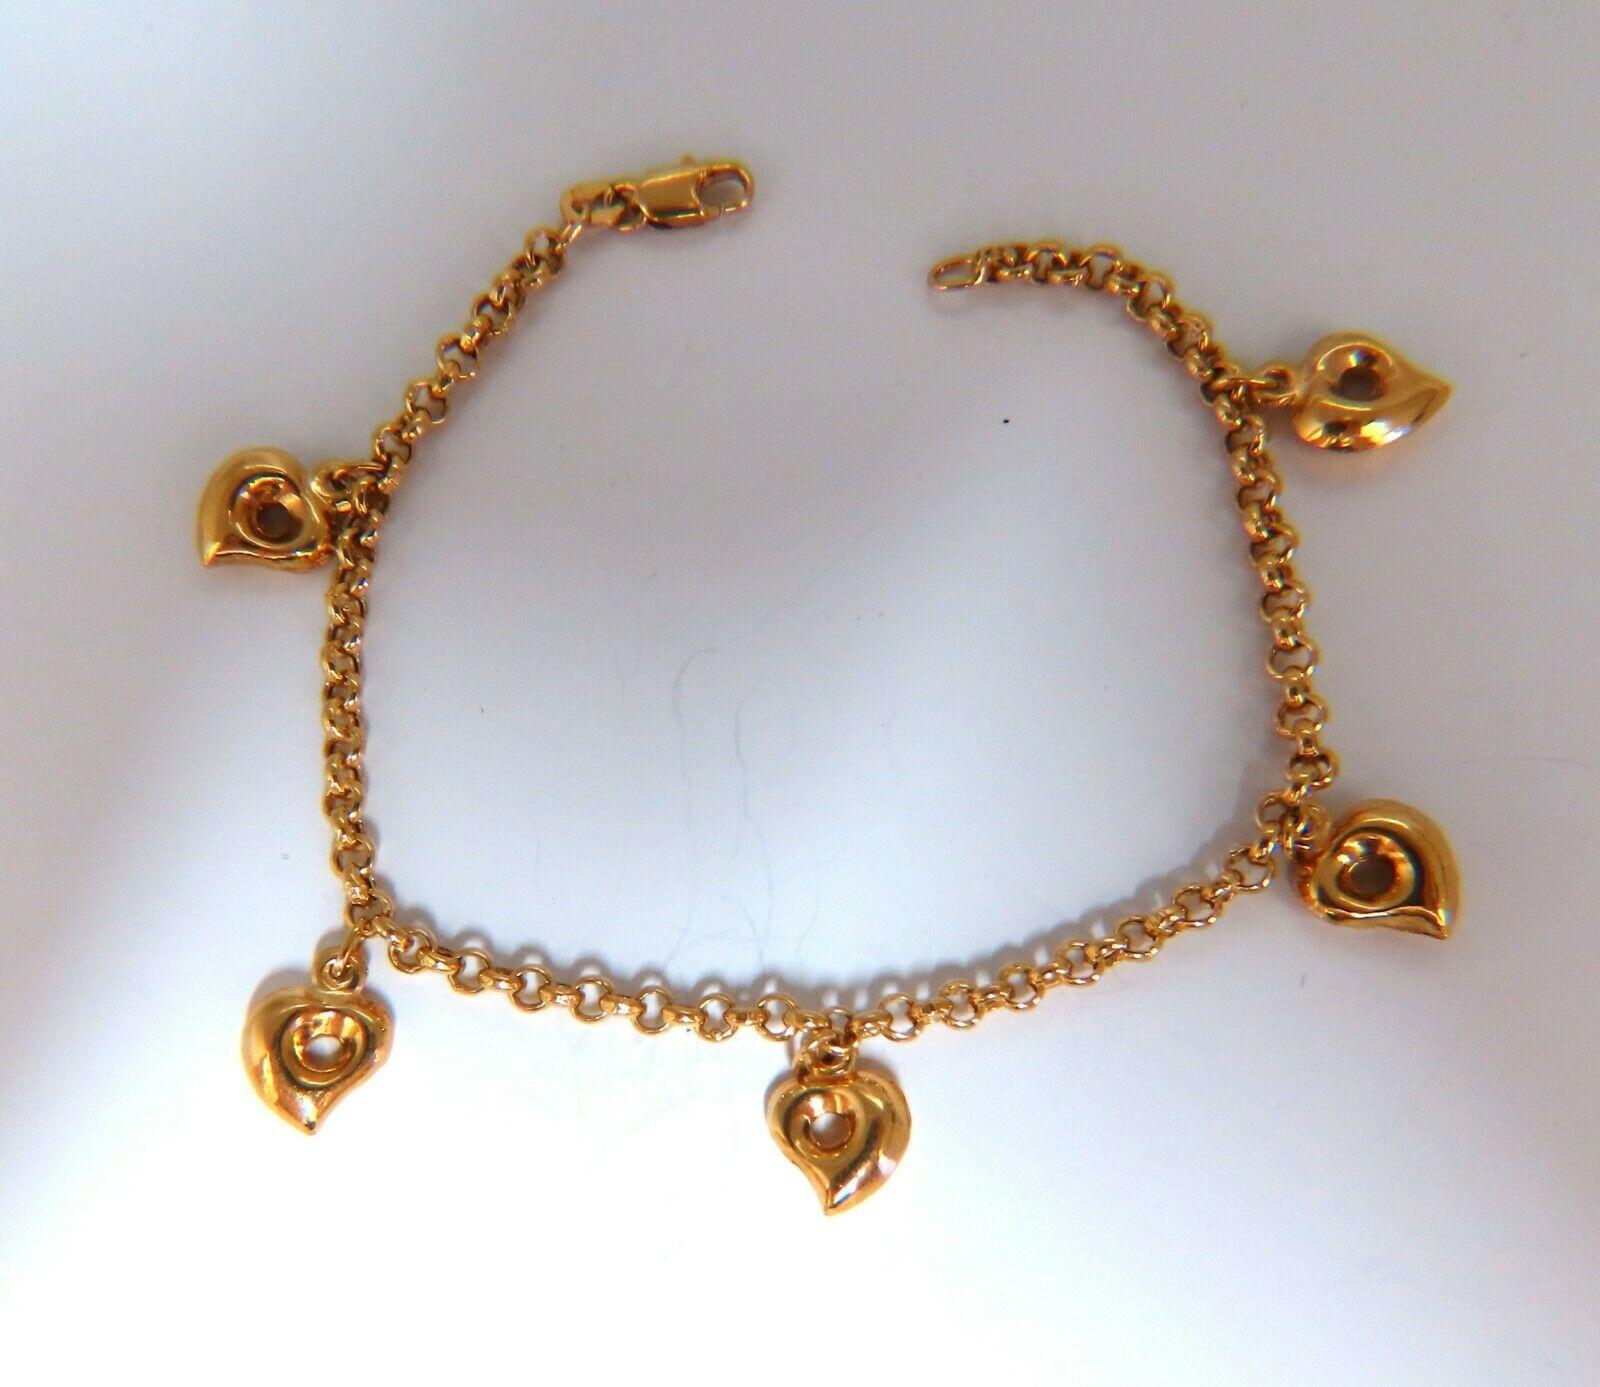 Five heart charm link bracelet.

Each charm 9x8 mm

Chain 3mm caliber

14 karat yellow gold 4.9 g

Bracelet measure 7-in

Secure lock